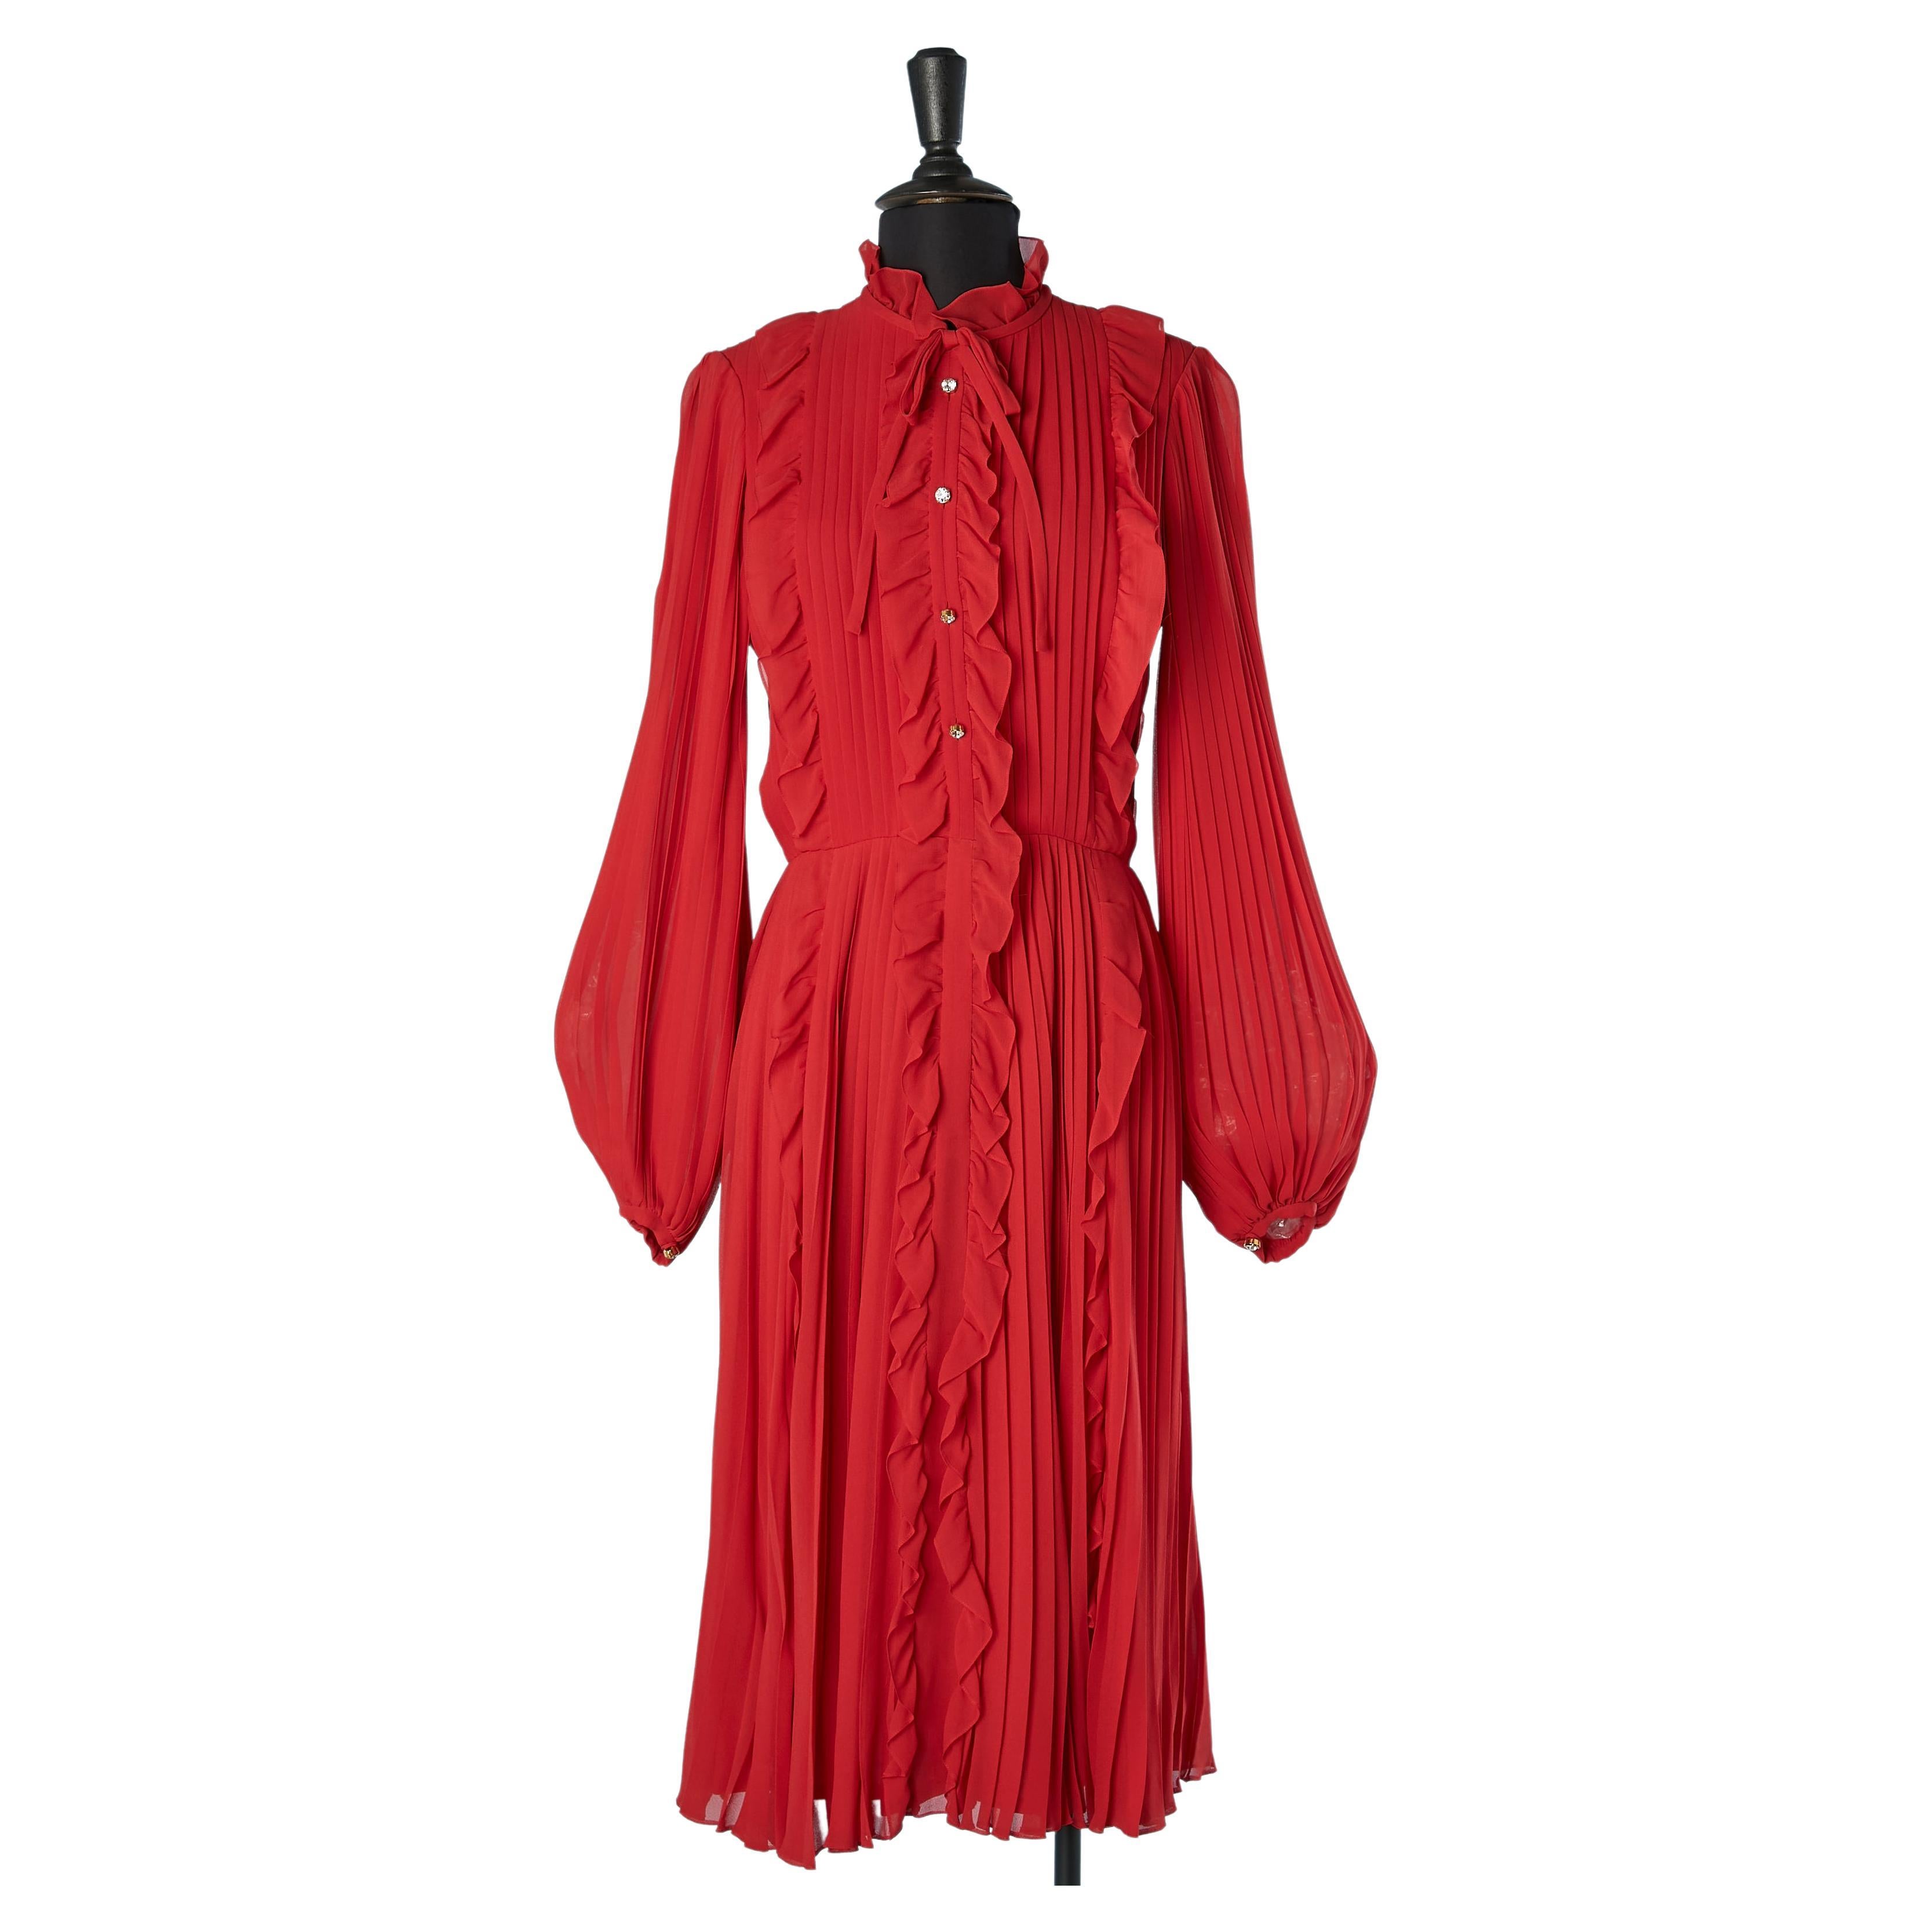 Red silk chiffon pleated cocktail dress with ruffles Philippe Venet Circa 1970